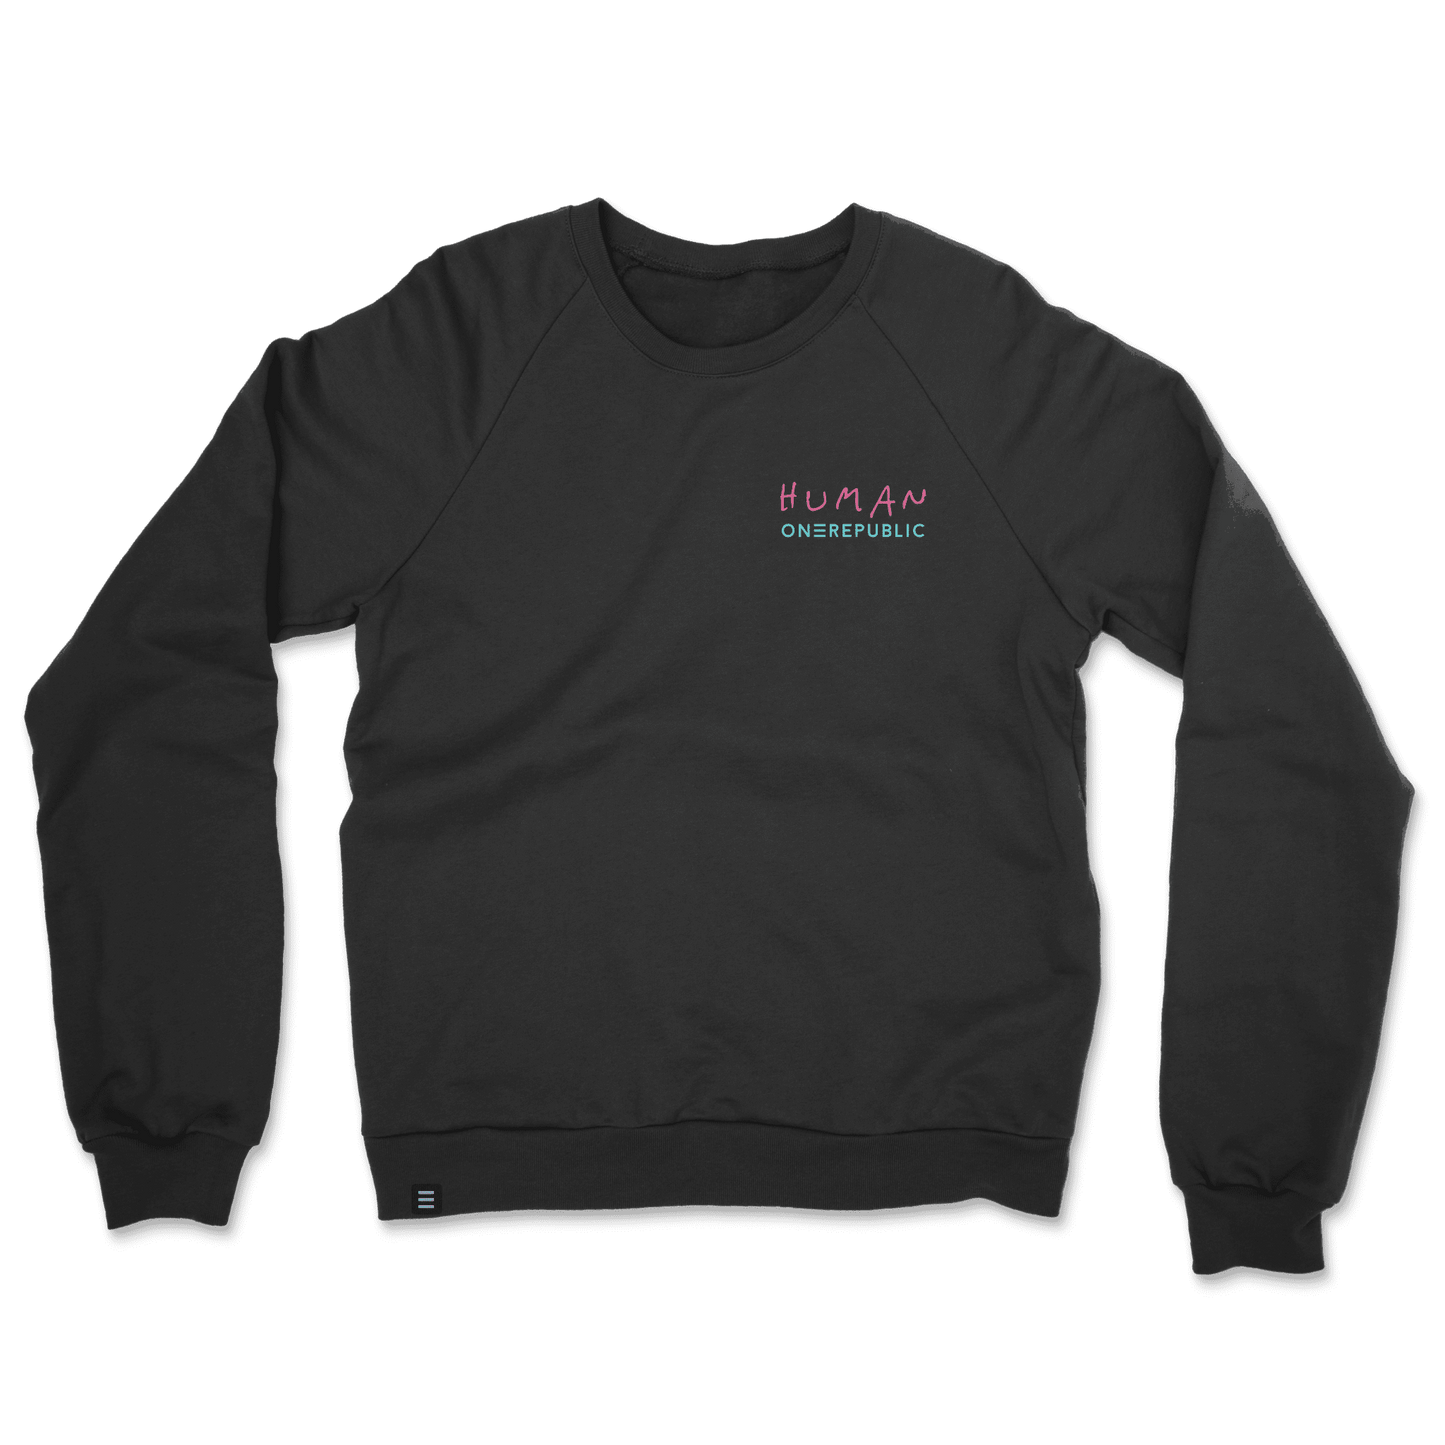 HUMAN Crew Sweatshirt (Black or White)